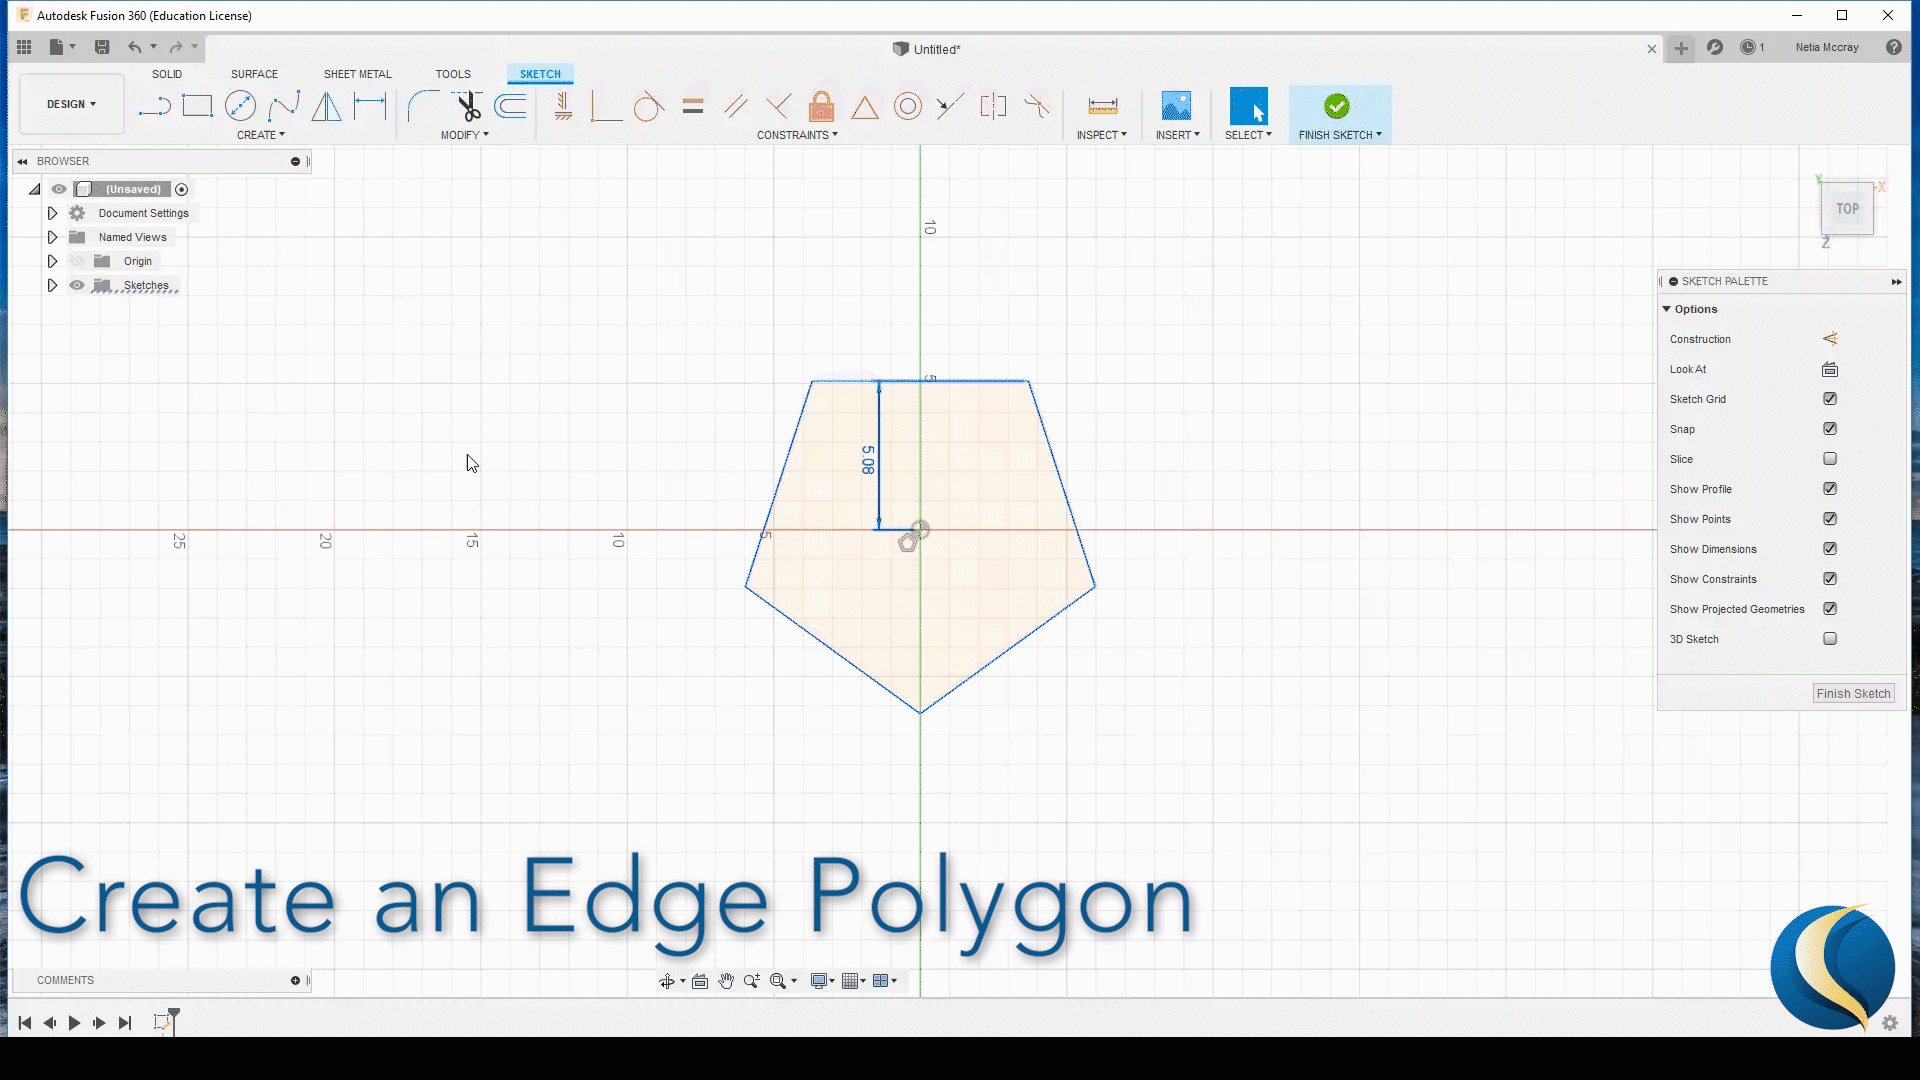 Edge Polygon